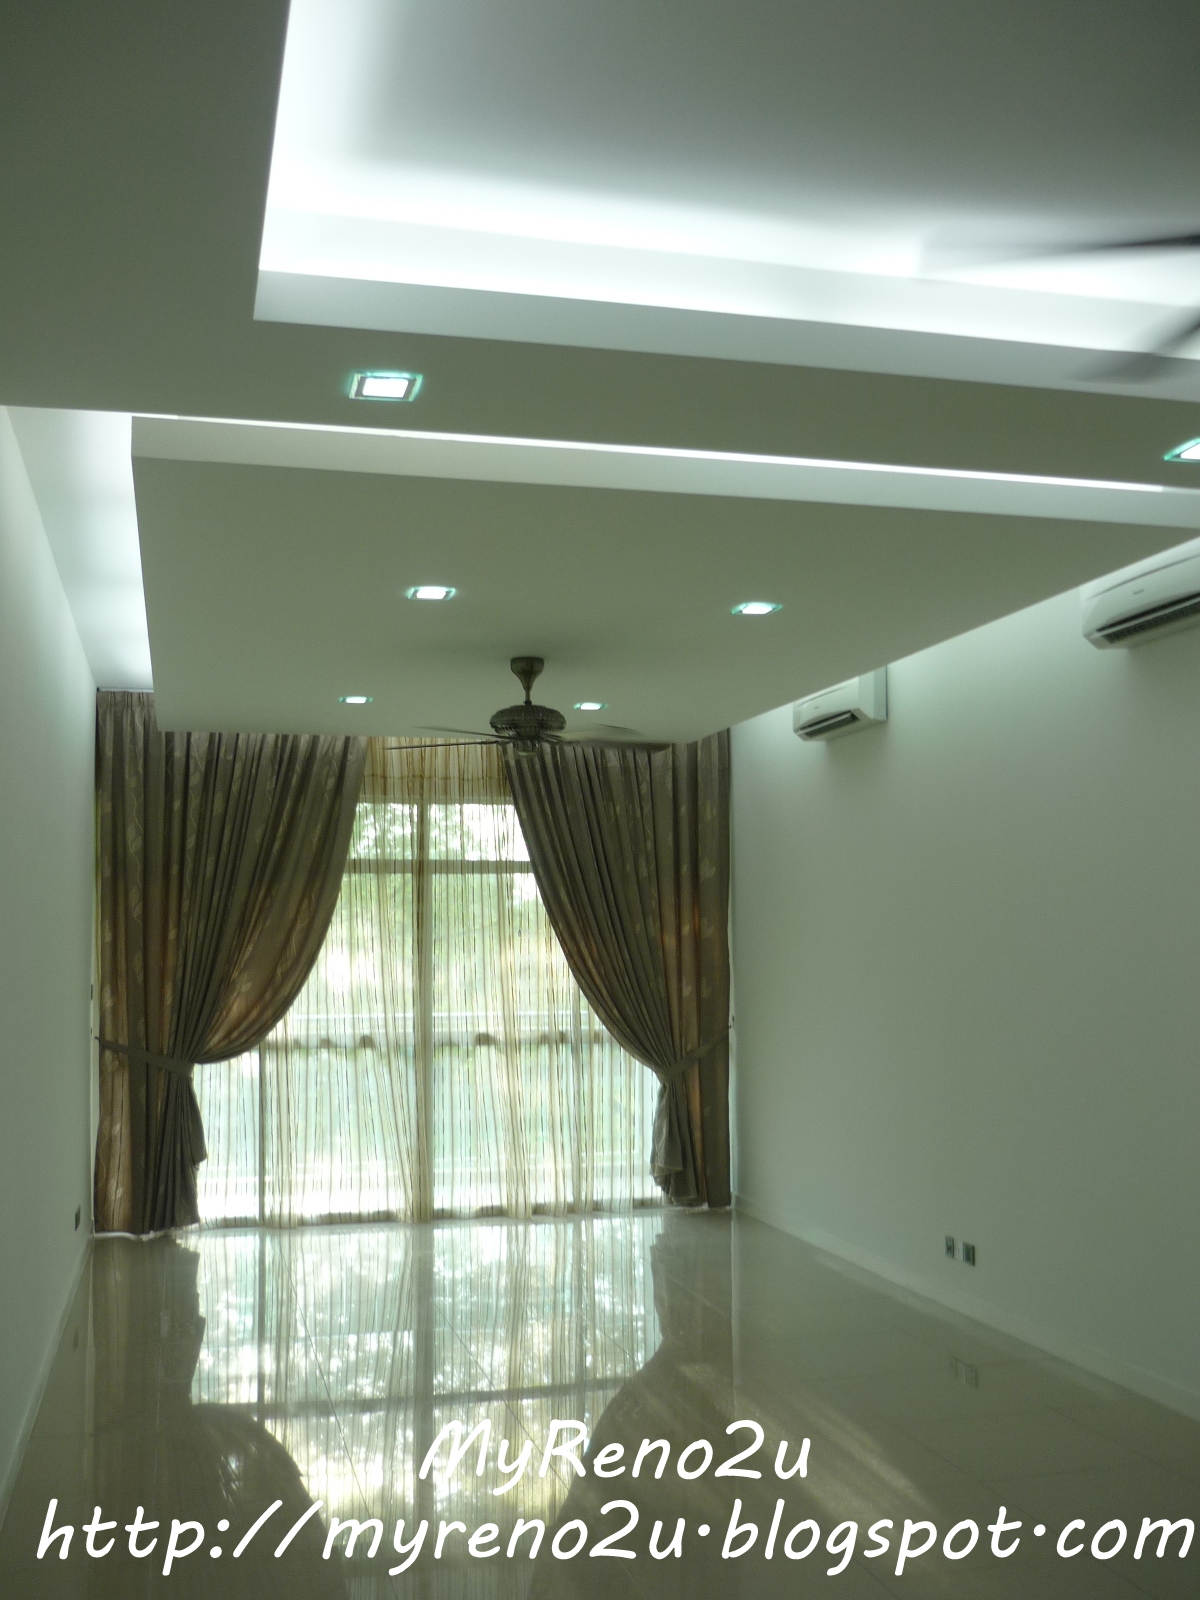 Plaster ceiling - Subang | MyReno2U